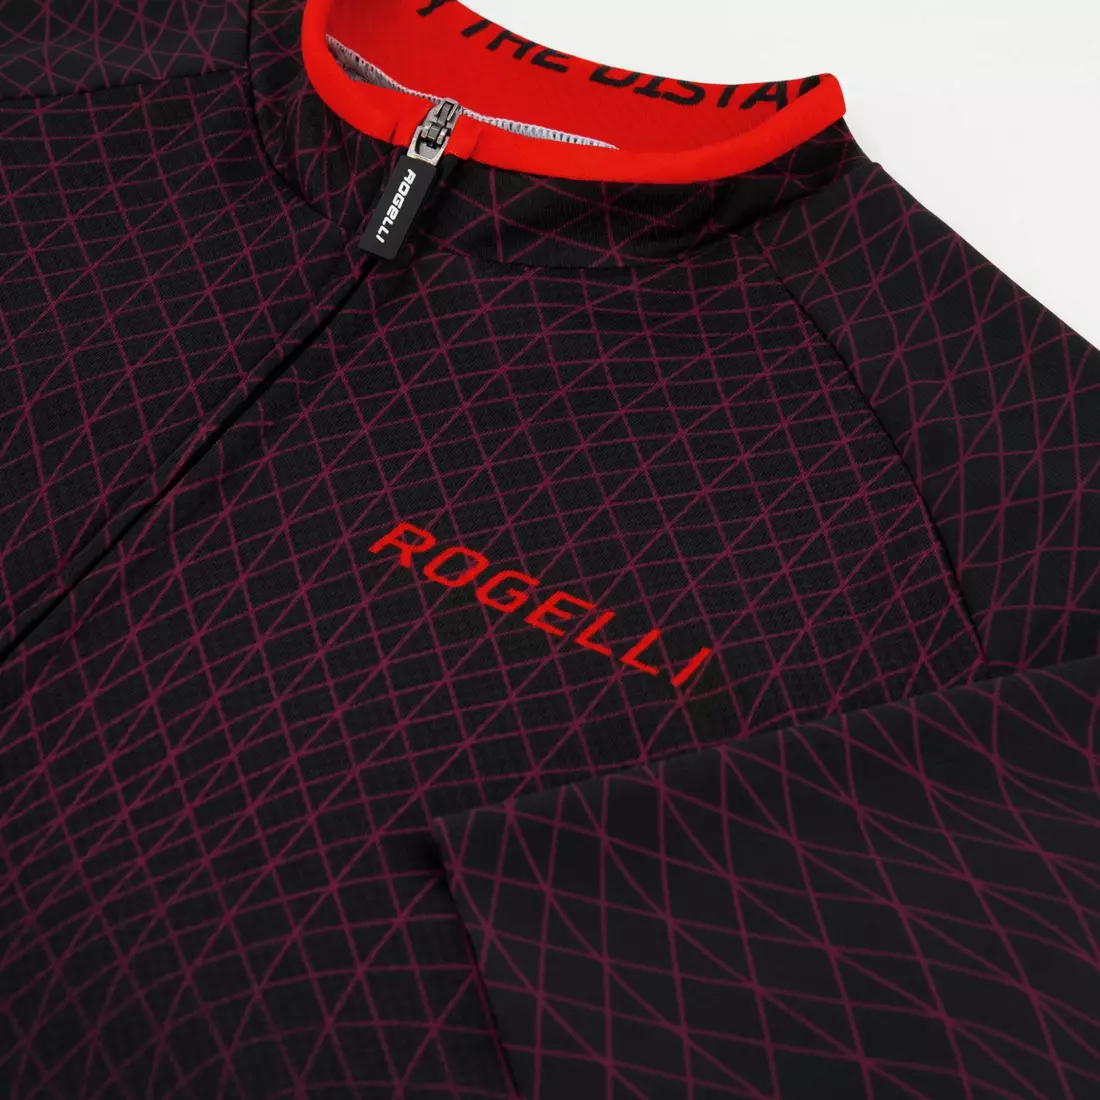 ROGELLI men's bicycle t-shirt WEAVE black/red 001.332